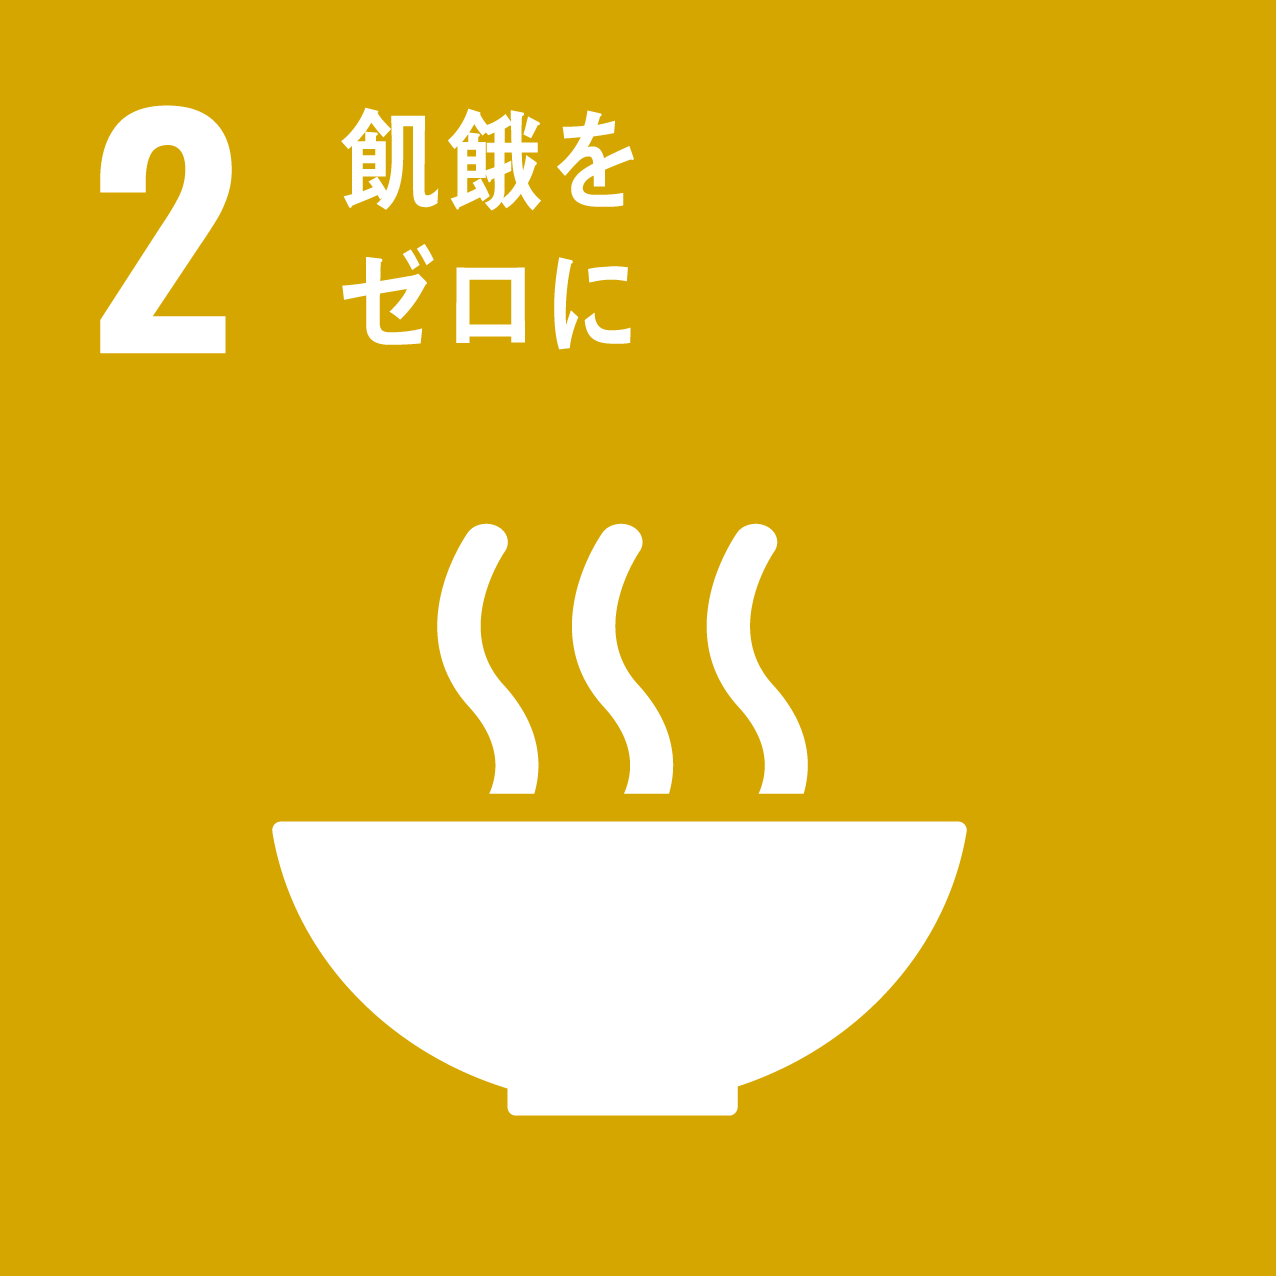 SDGsロゴ2